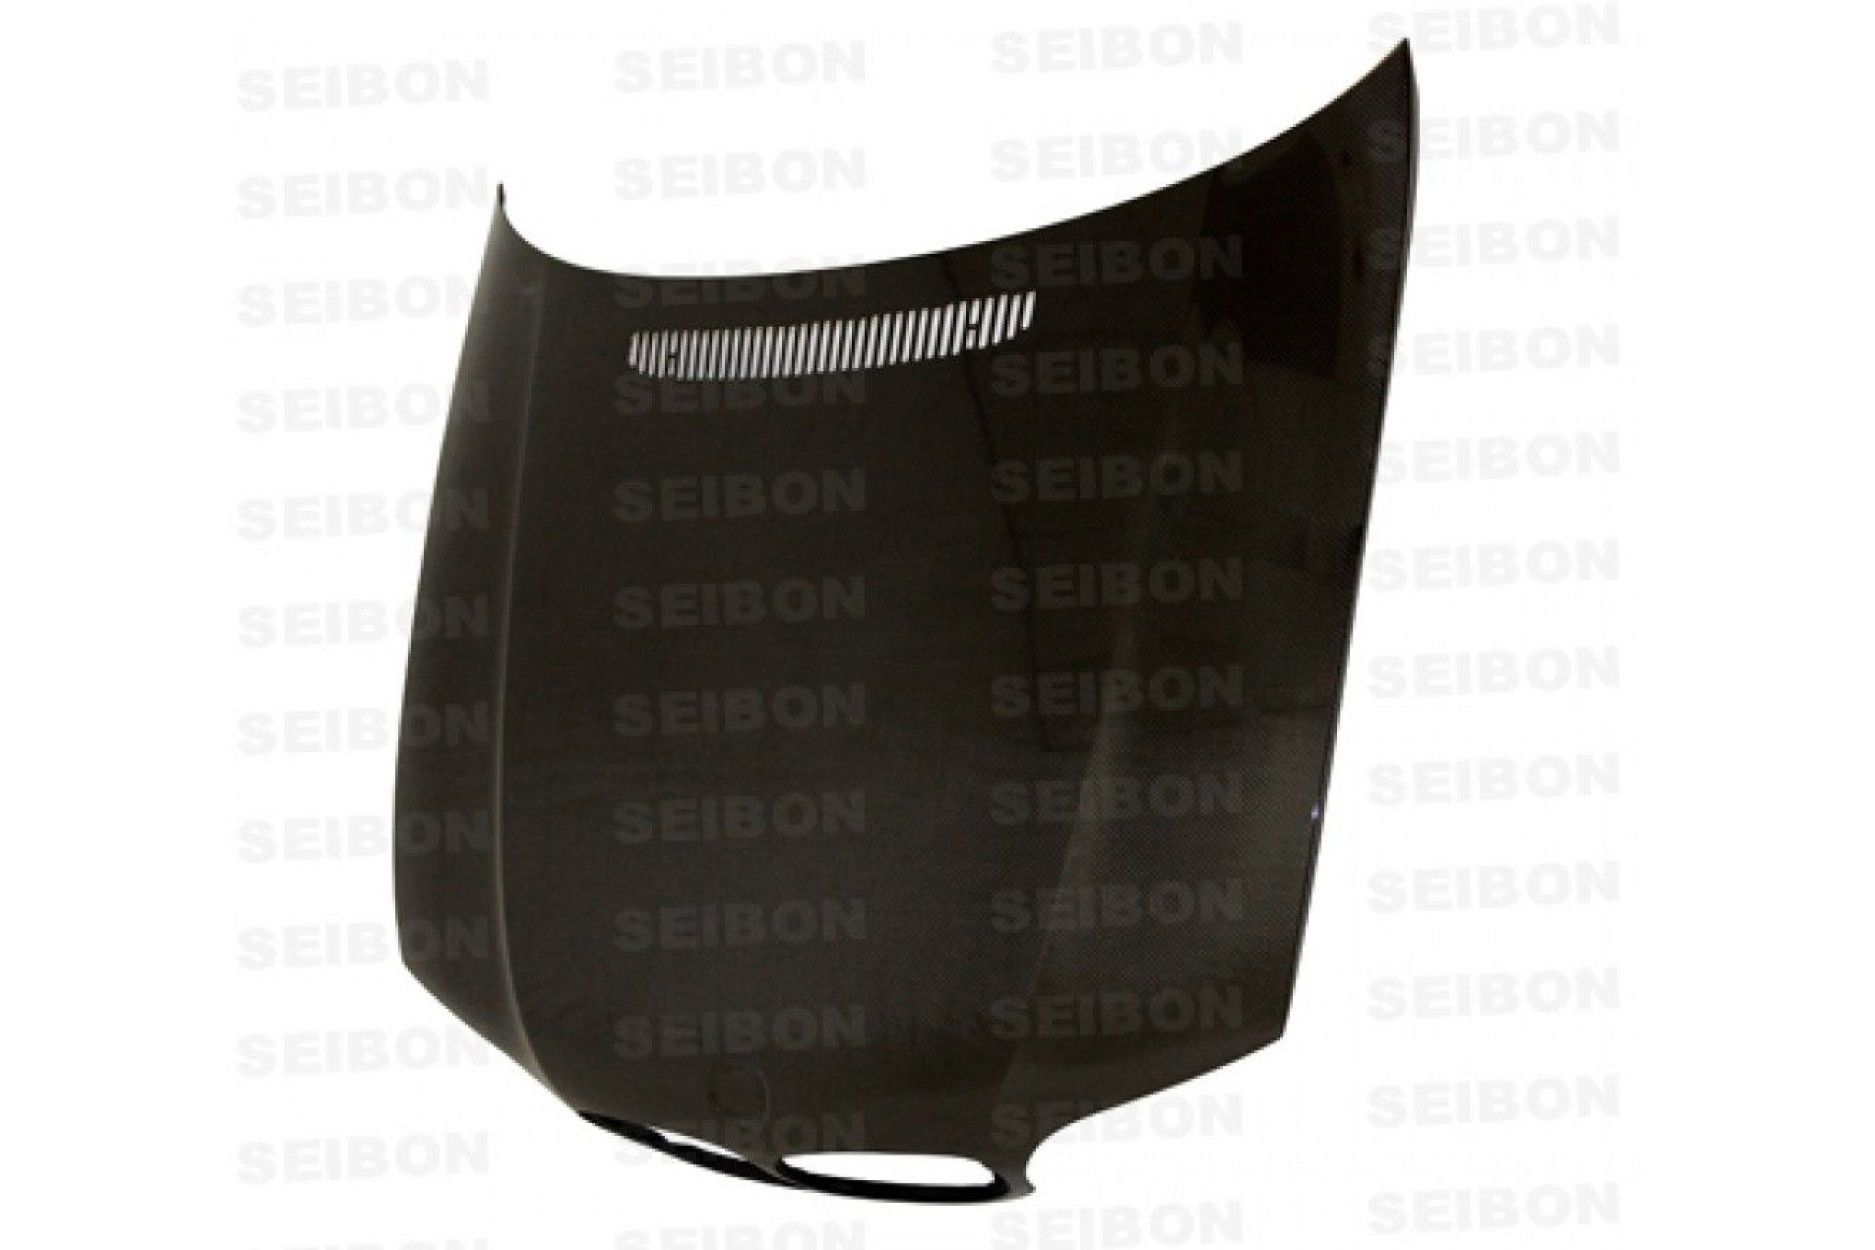 Seibon carbon hood for BMW 3er E46 coupé and convertible facelift 2002 - 2005 OE-Style